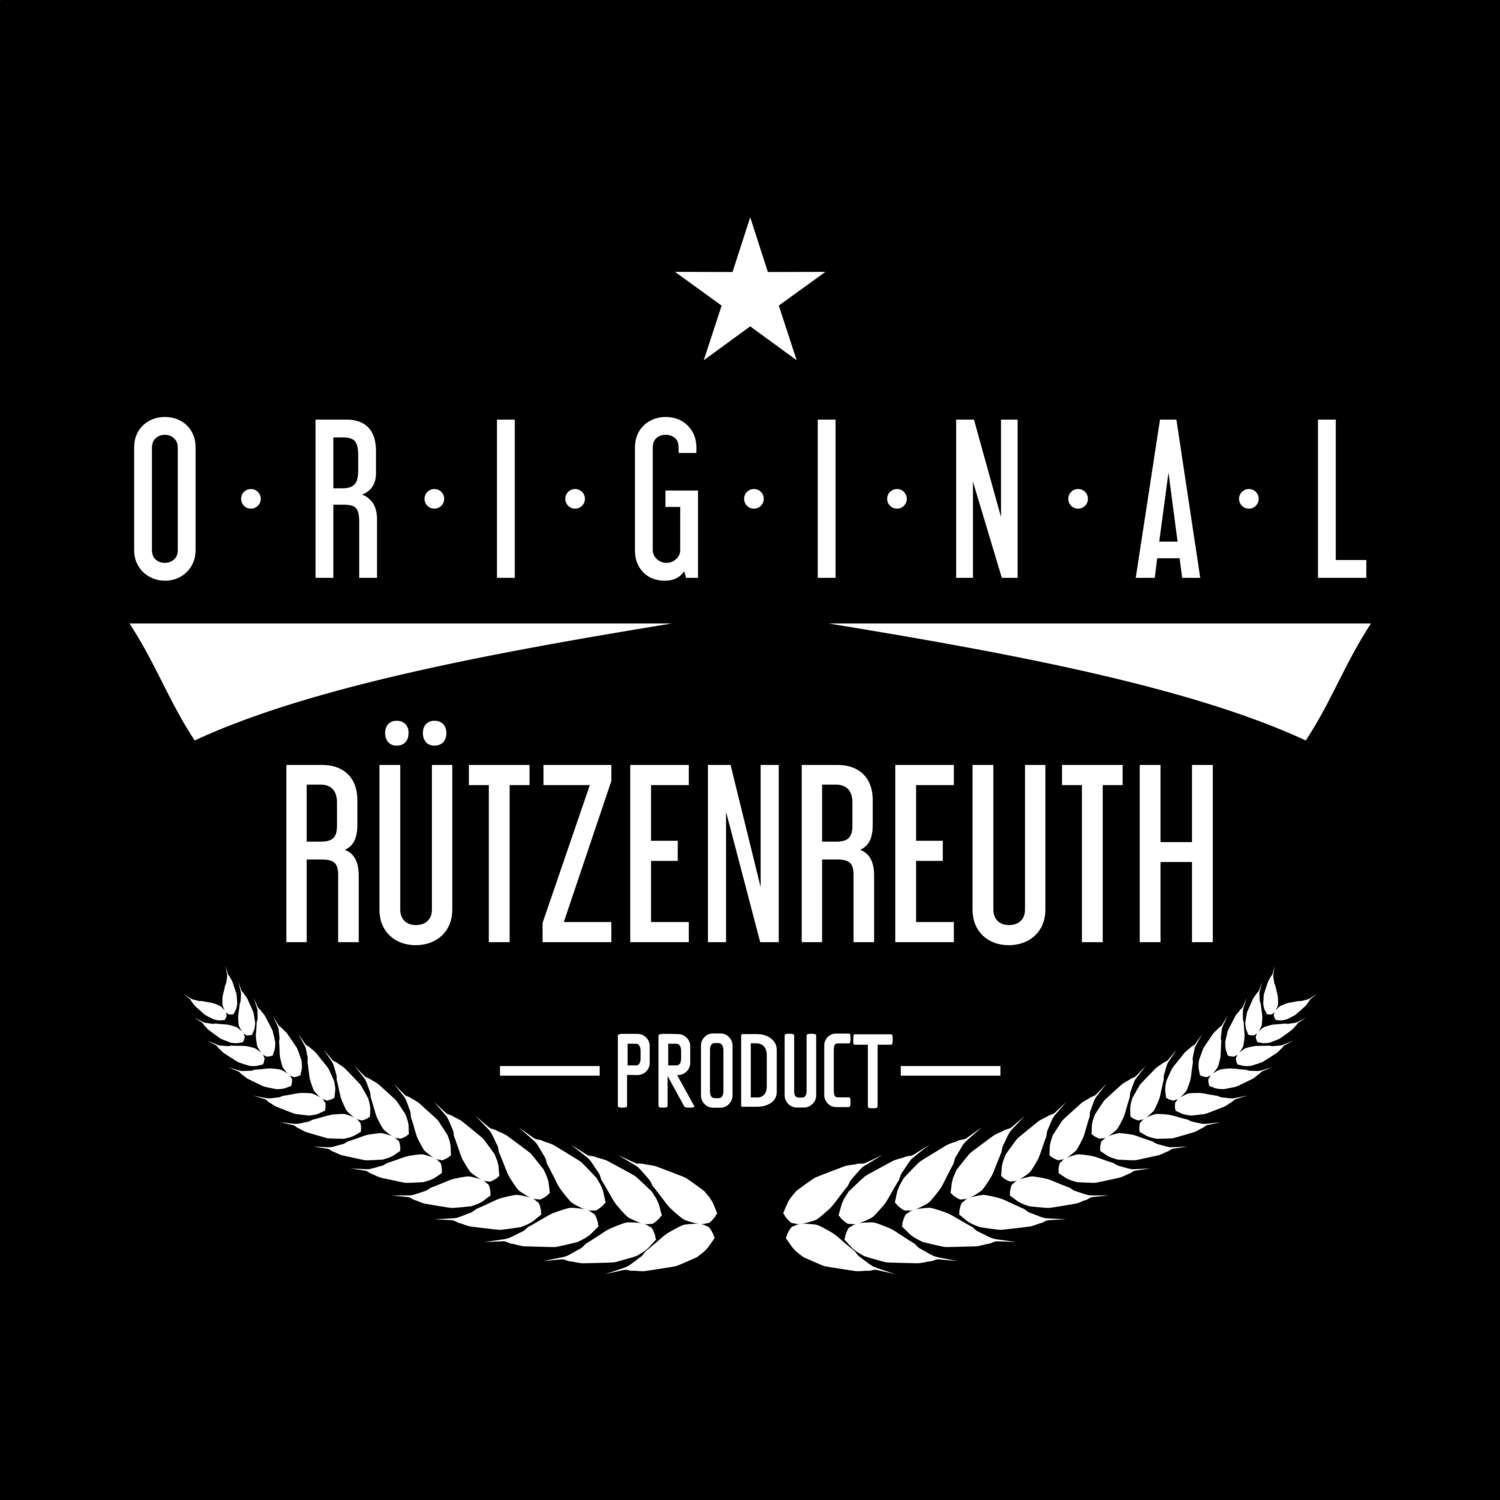 Rützenreuth T-Shirt »Original Product«